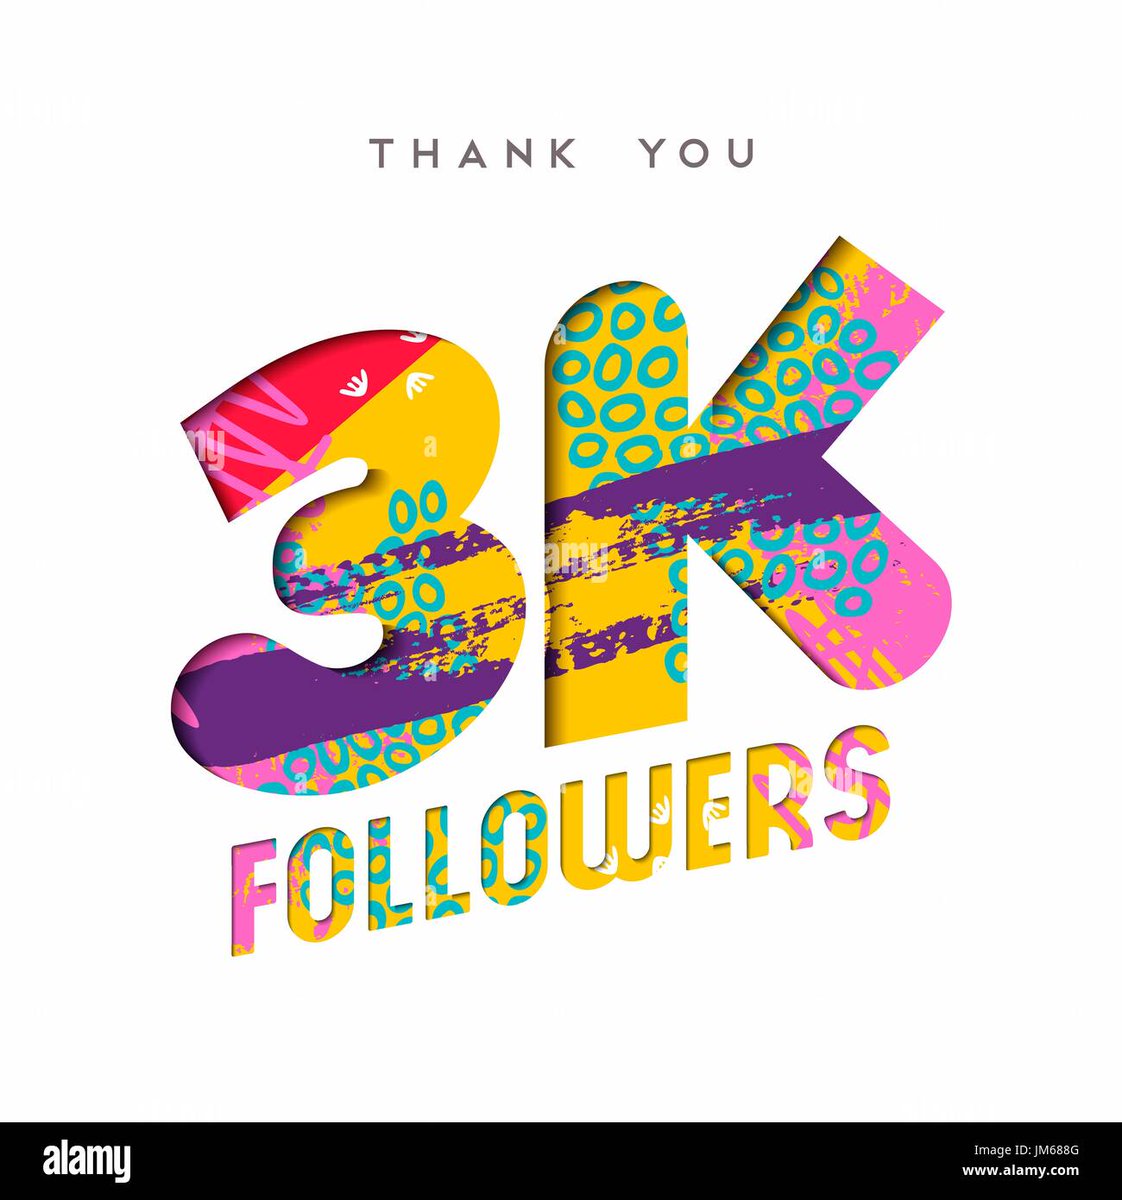 Assalam u Alaikum 3k Followers Complete ❤️ Thank you X Family 👍 Good Night 🌃 Sweet Dreams ✨️ Stay Happy Sleep well 😴